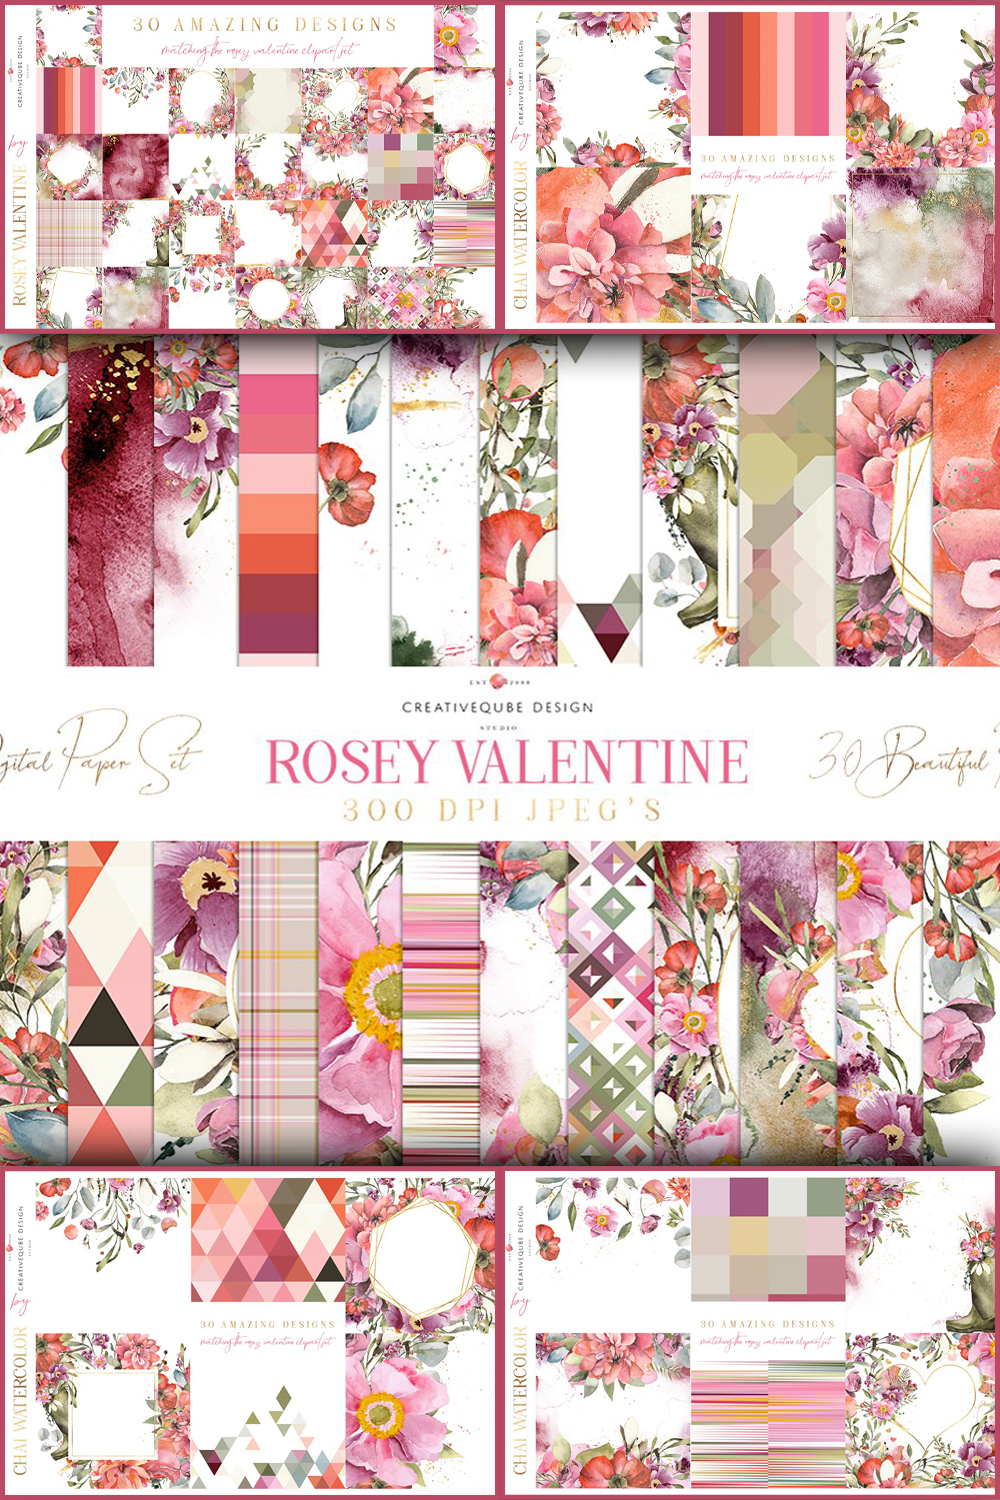 Rosey valentines digital papers illustration of pinterest.